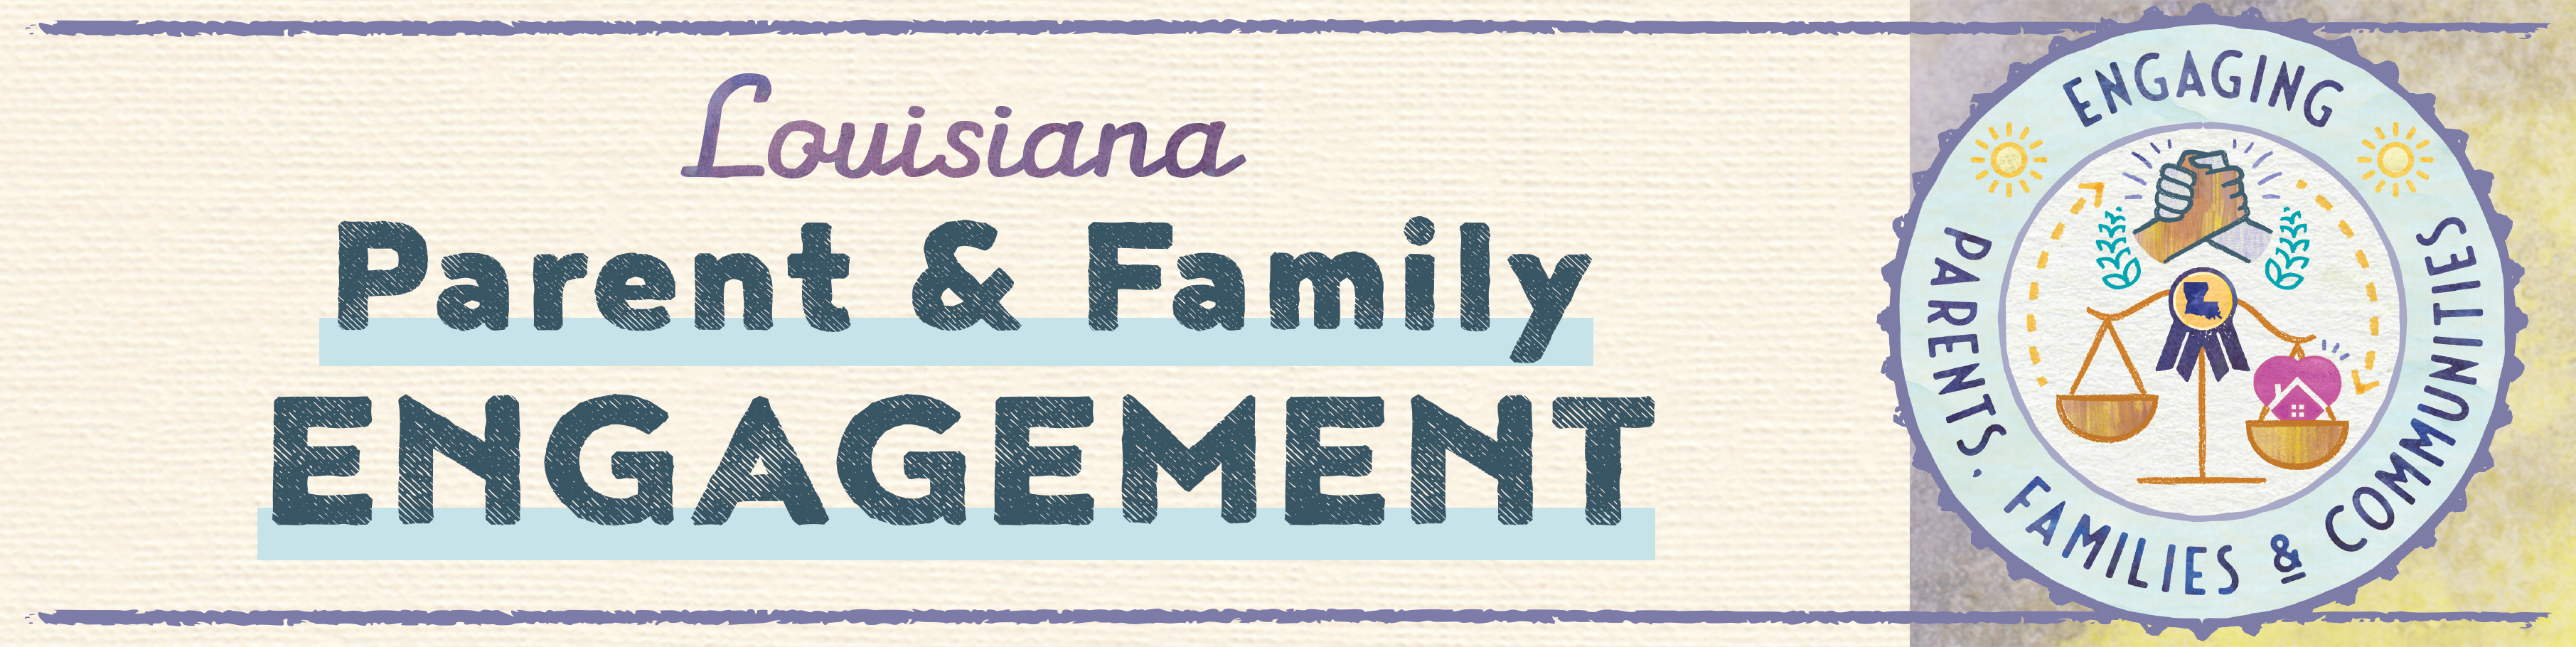 Louisiana Parent and Family Engagement - Engaging Parents, Families & Communities